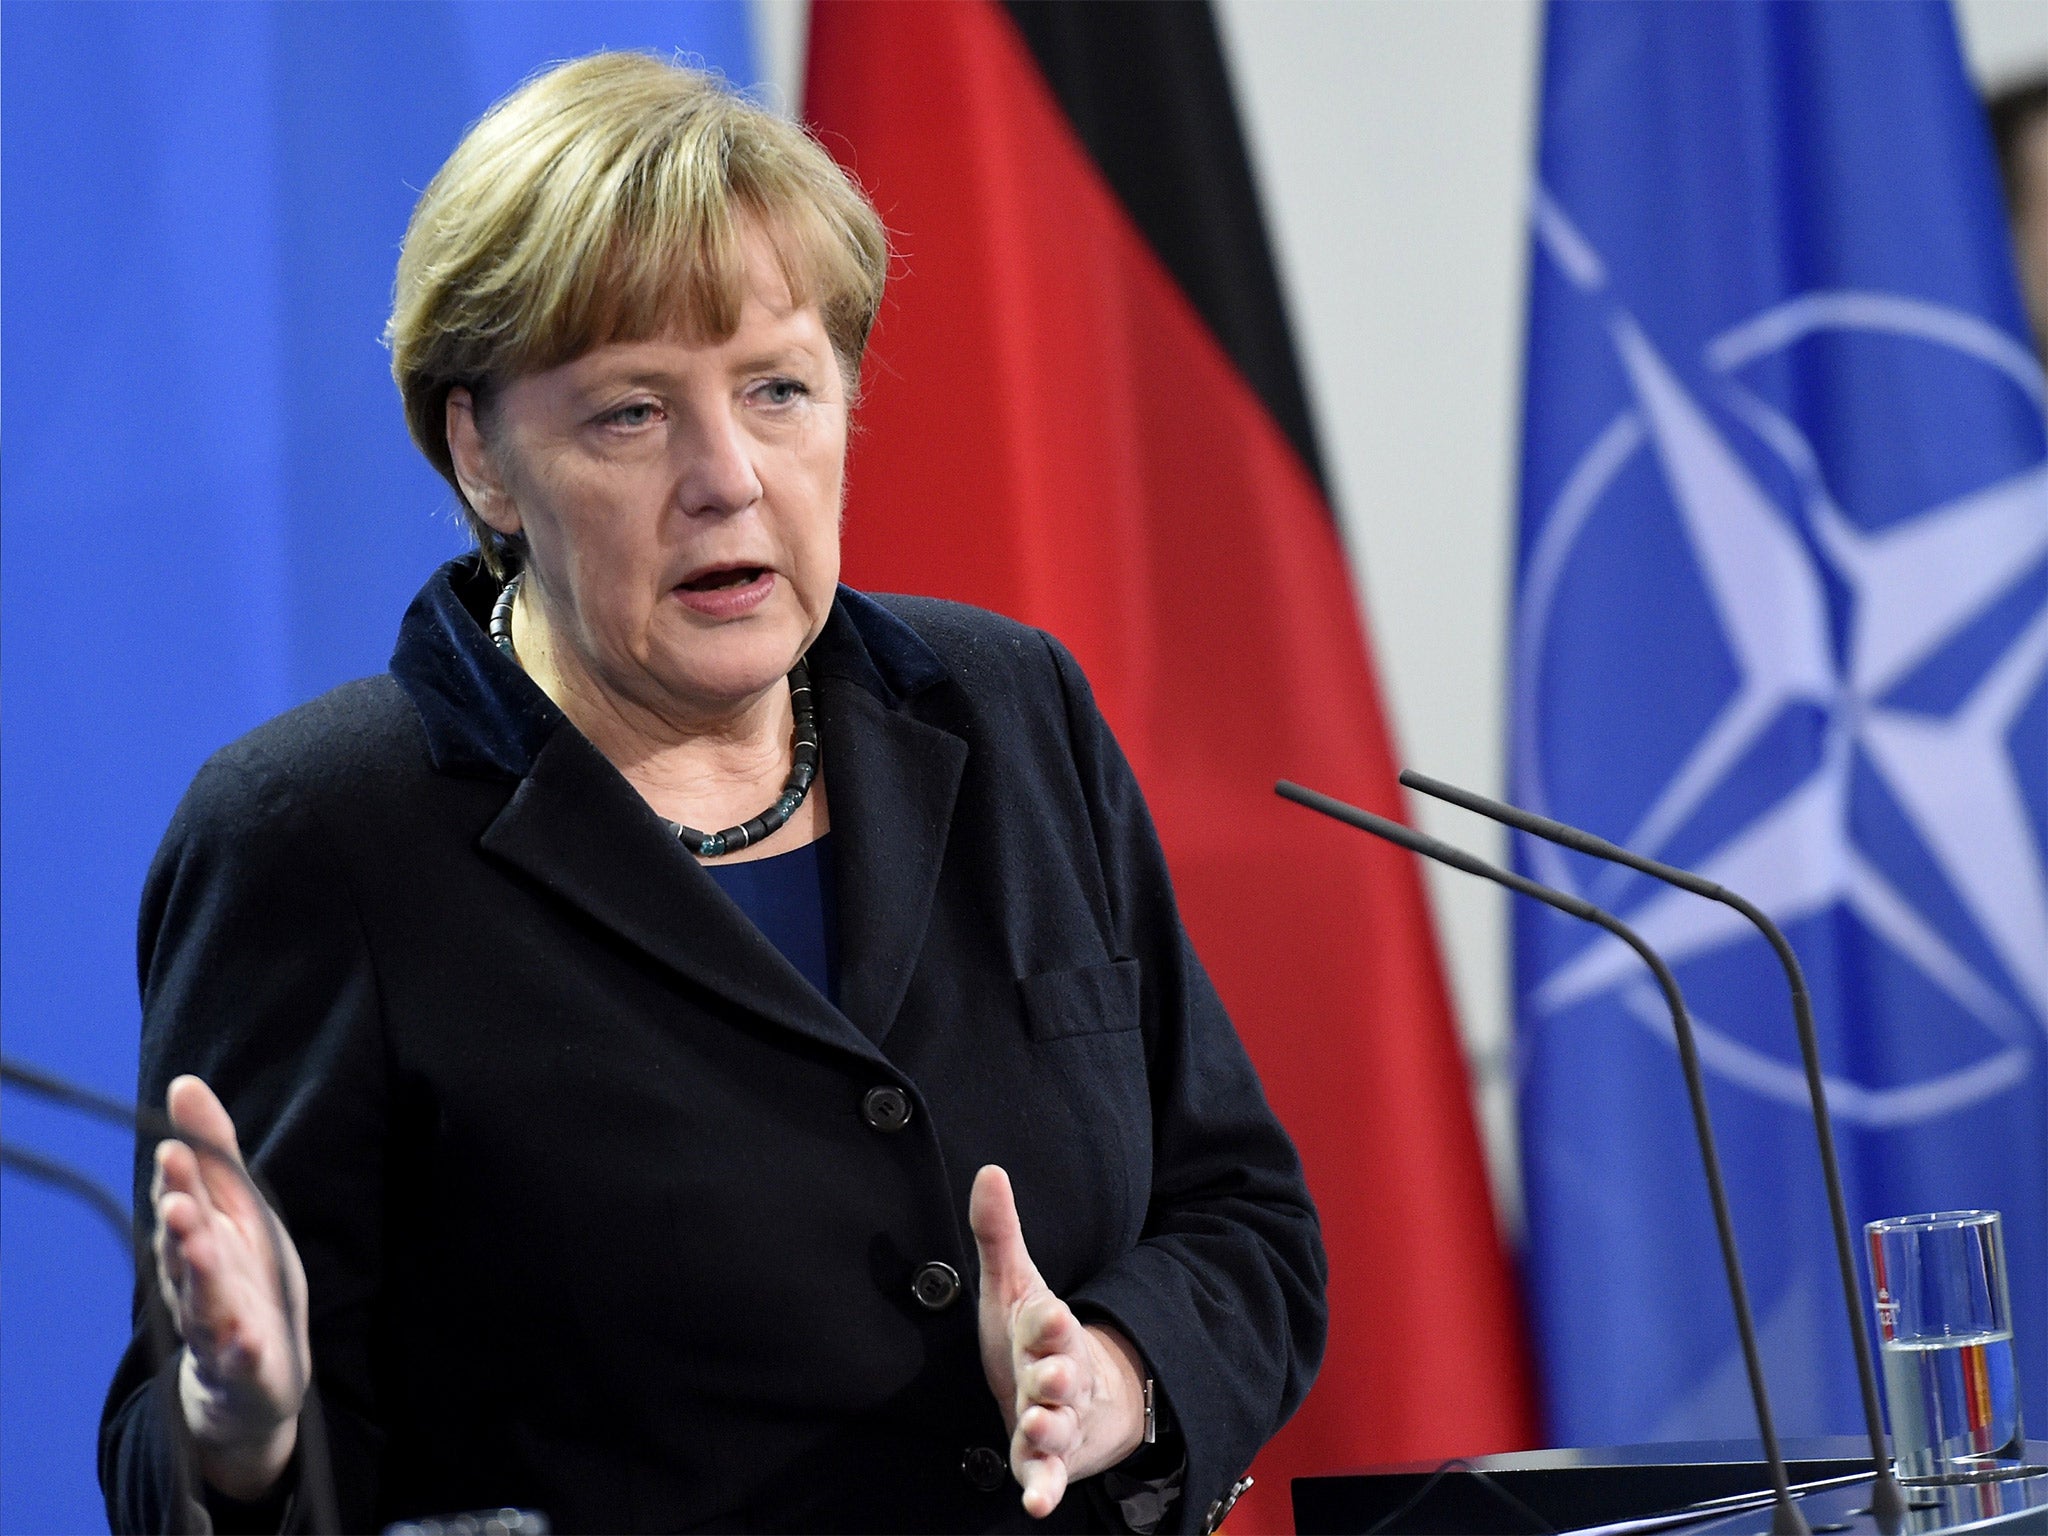 Angela Merkel said Germany still wants Greece to remain within the eurozone